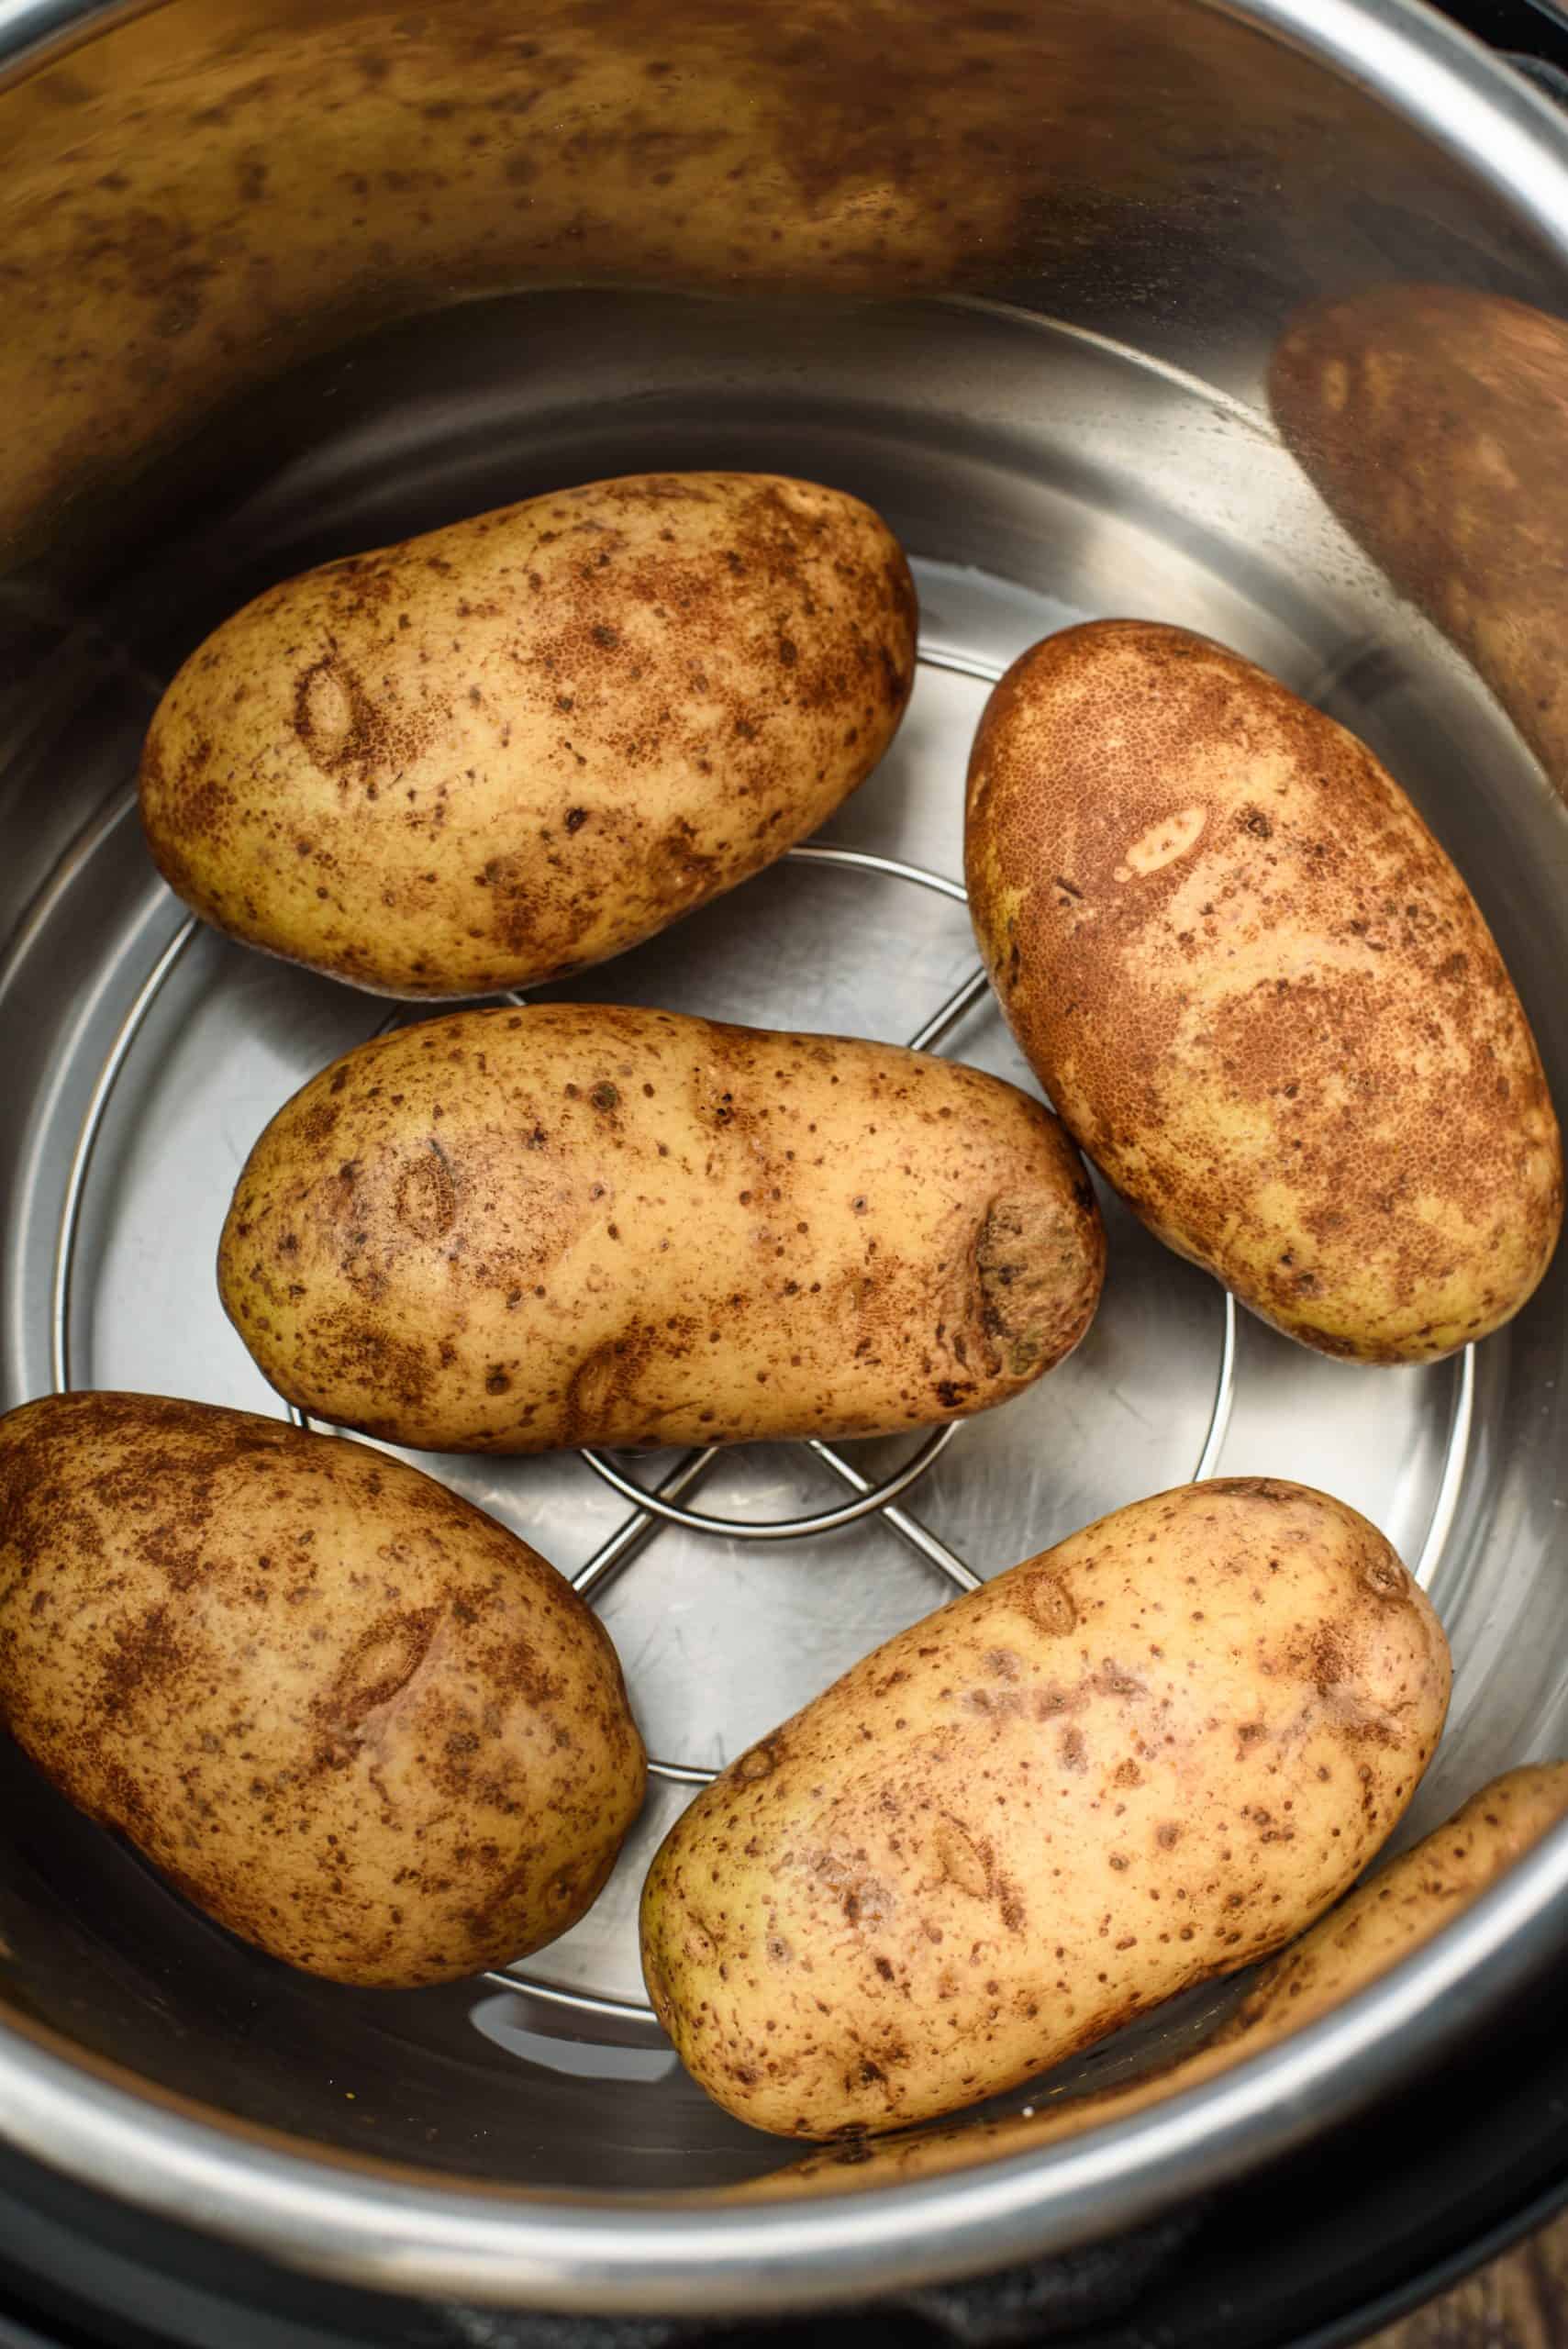 https://www.shugarysweets.com/wp-content/uploads/2020/01/instant-pot-baked-potatoes-1-scaled.jpg